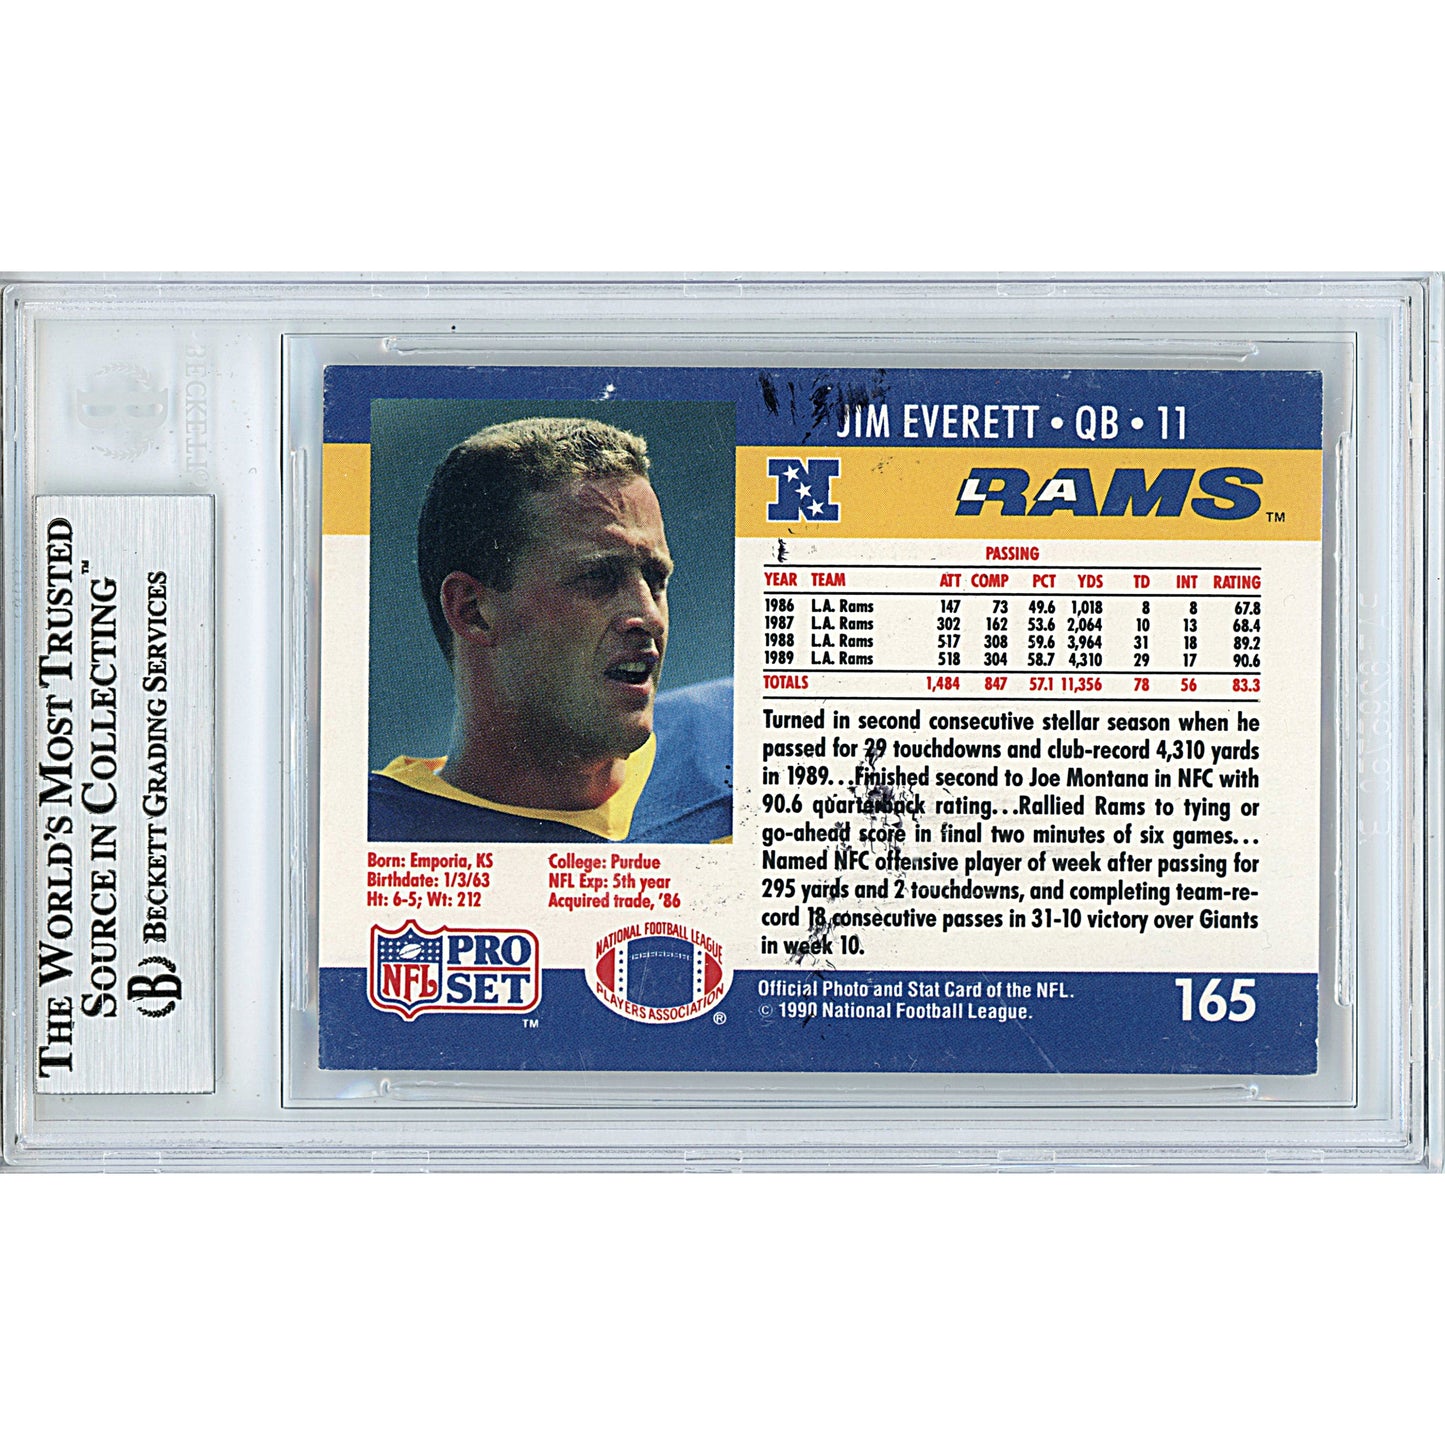 Footballs- Autographed- Jim Everett Signed Los Angeles Rams 1990 NFL Pro Set Football Card Beckett BAS Authenticated Slabbed 00013190439 - 102